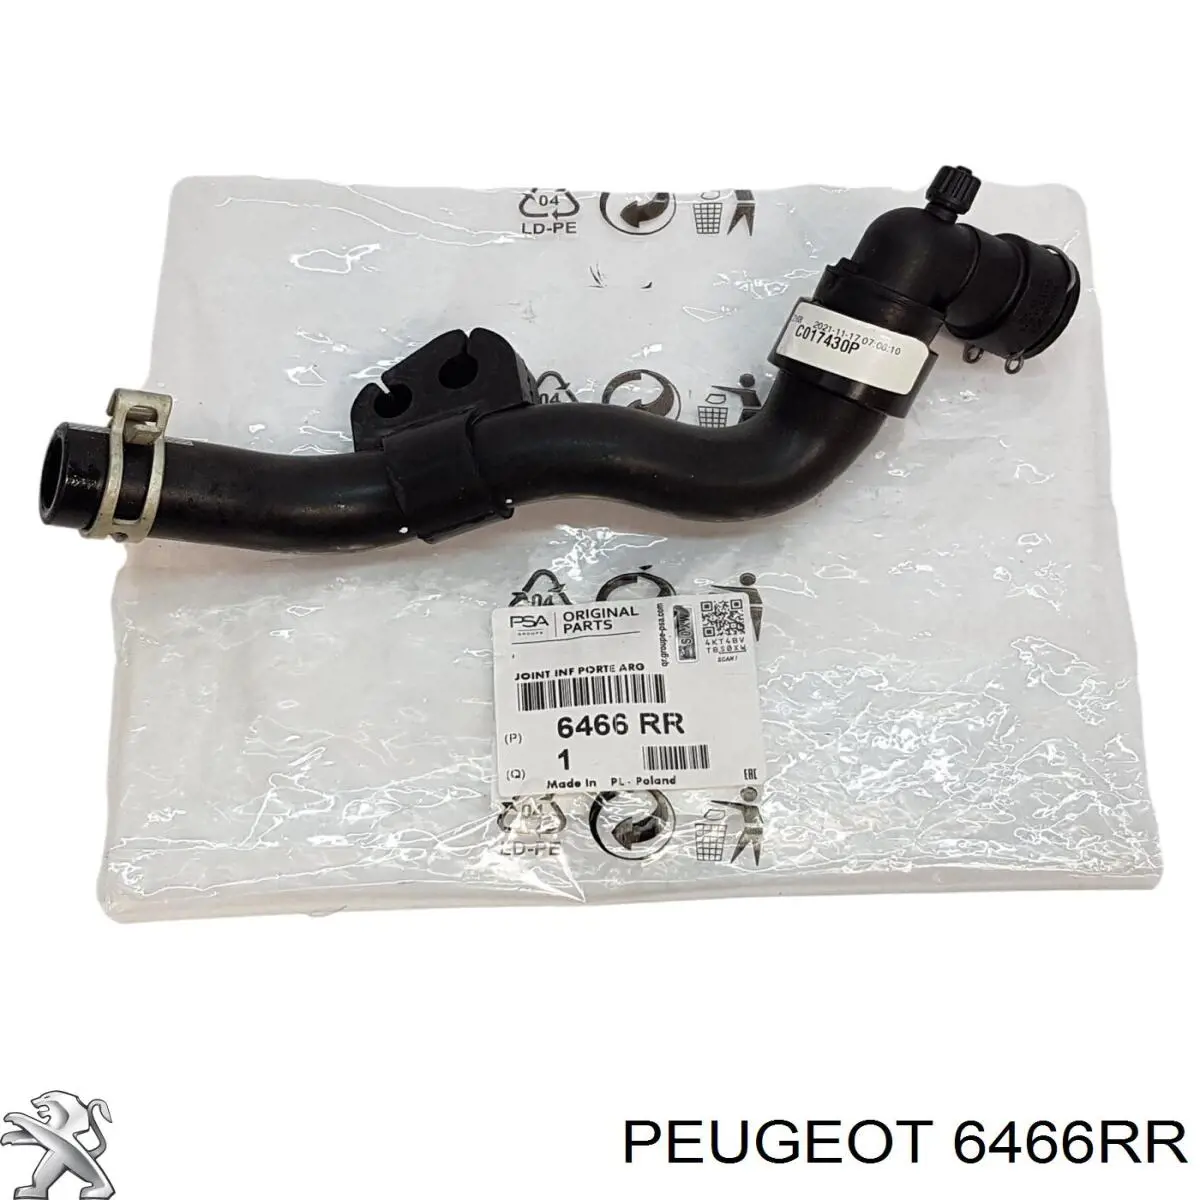 00006466RR Peugeot/Citroen mangueira do radiador de aquecedor (de forno, linha de combustível de retorno)